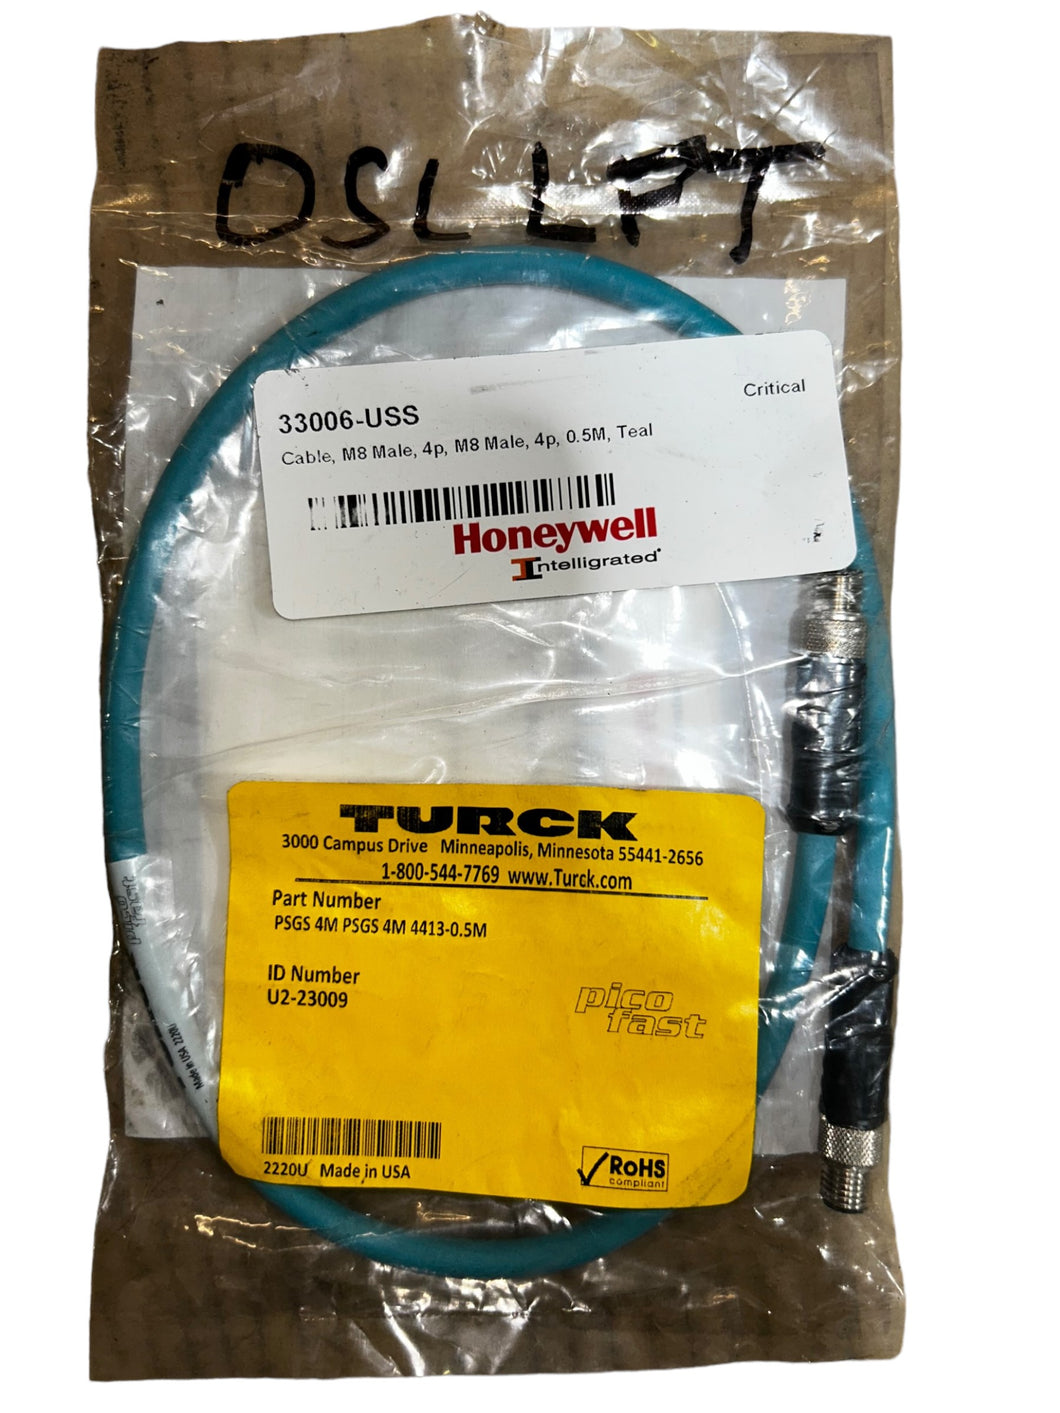 Turck, PSGS 4M PSGS 4M 4413-0.5M, Double-ended Cable / Cordset - NEW IN ORIGINAL PACKAGING - FreemanLiquidators - [product_description]